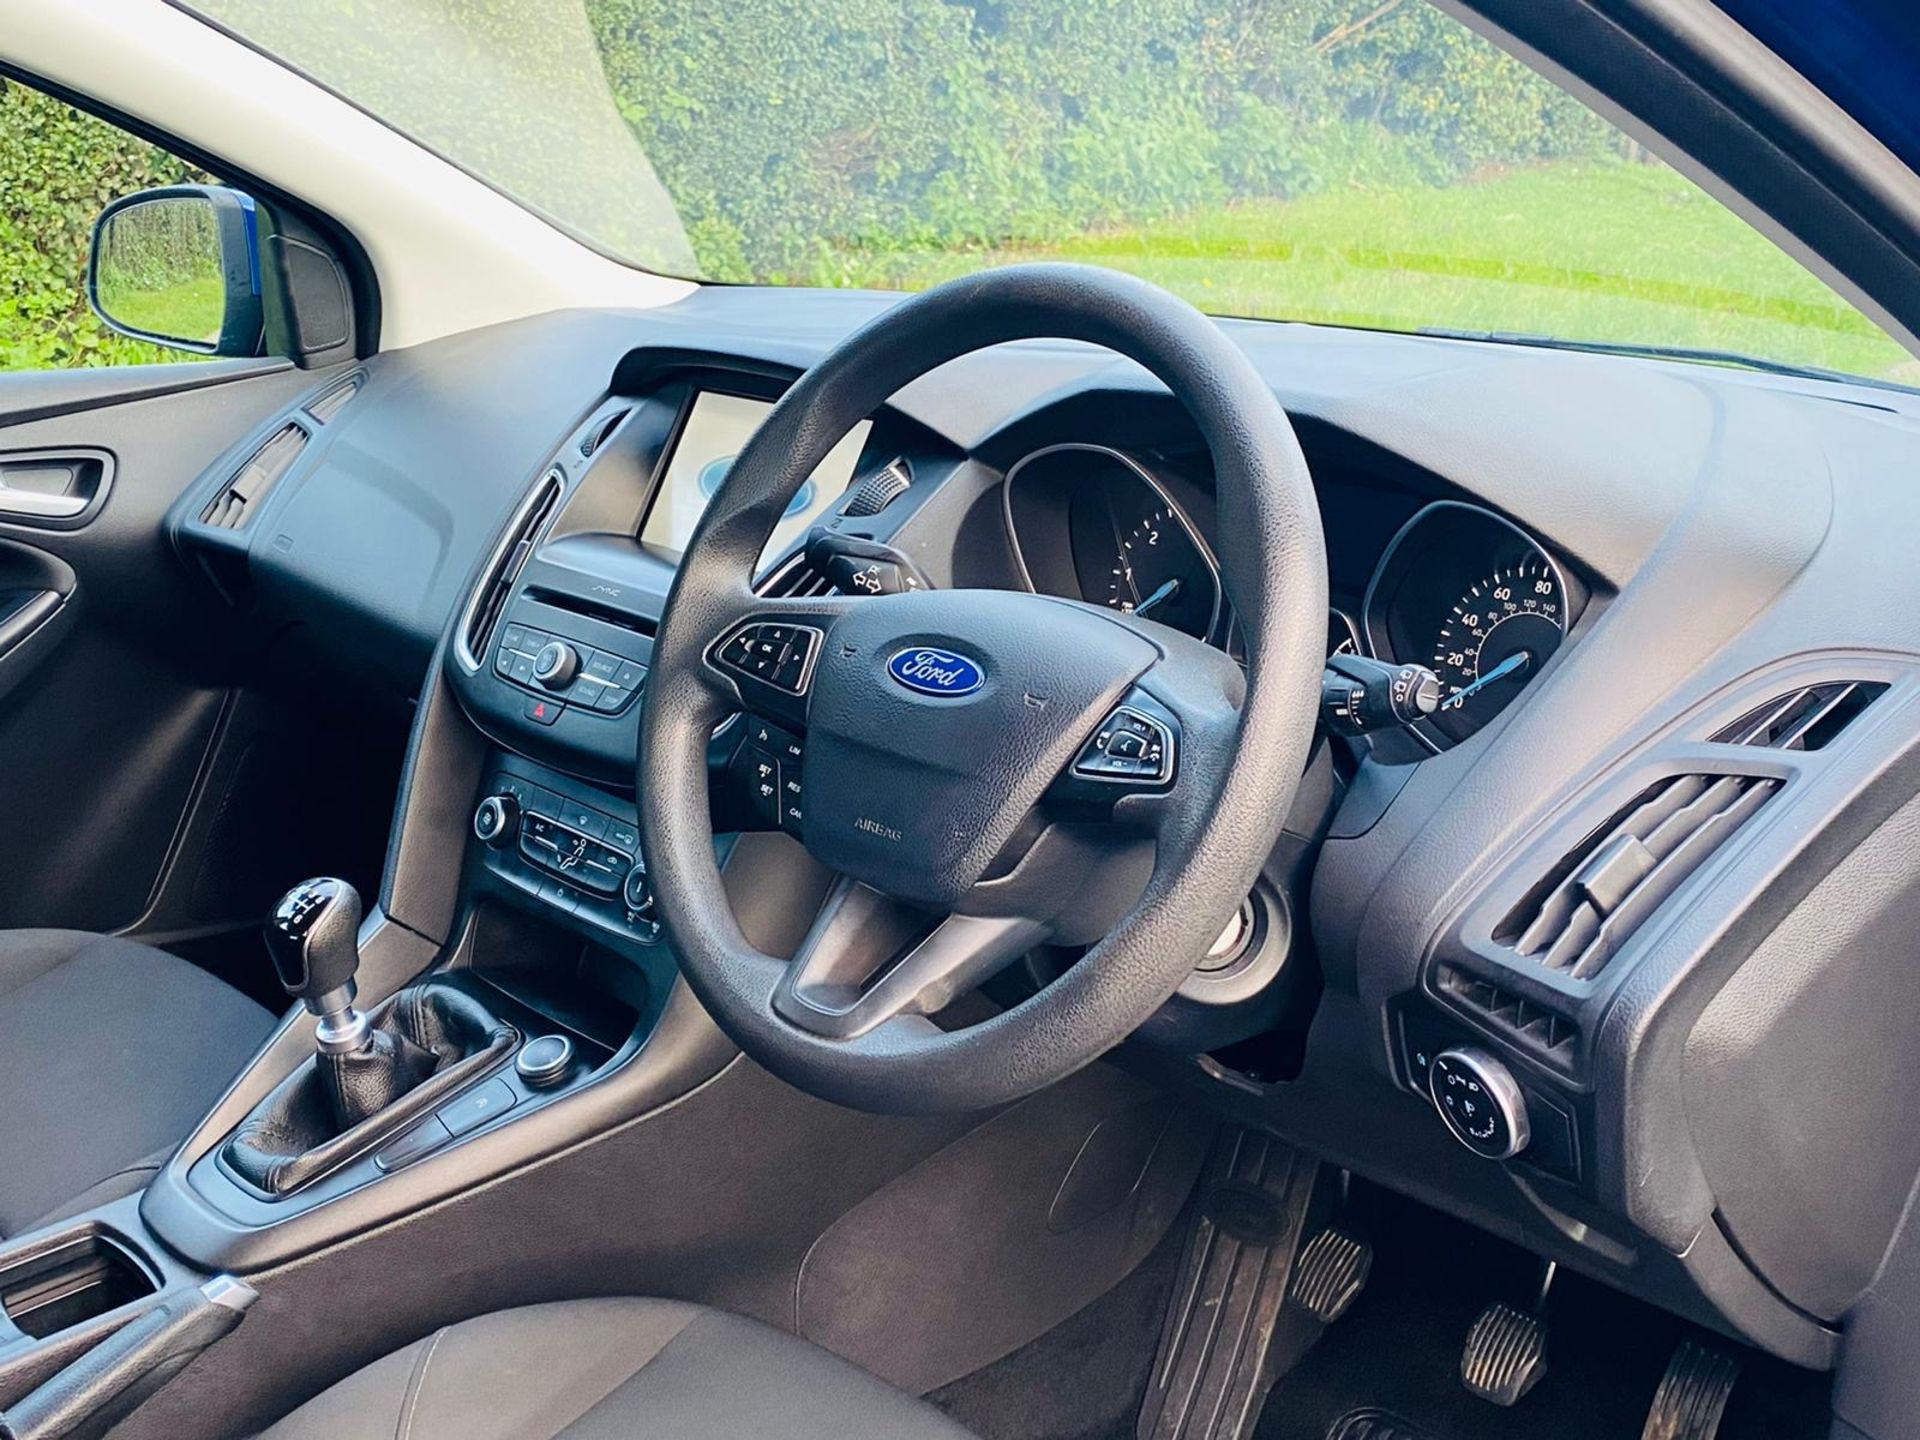 Ford Focus Style Econetic 1.5 Tdci 105 Bhp 2016 16 Reg - Sat Nav - Air Con - ULEZ Compliant - Image 37 of 40